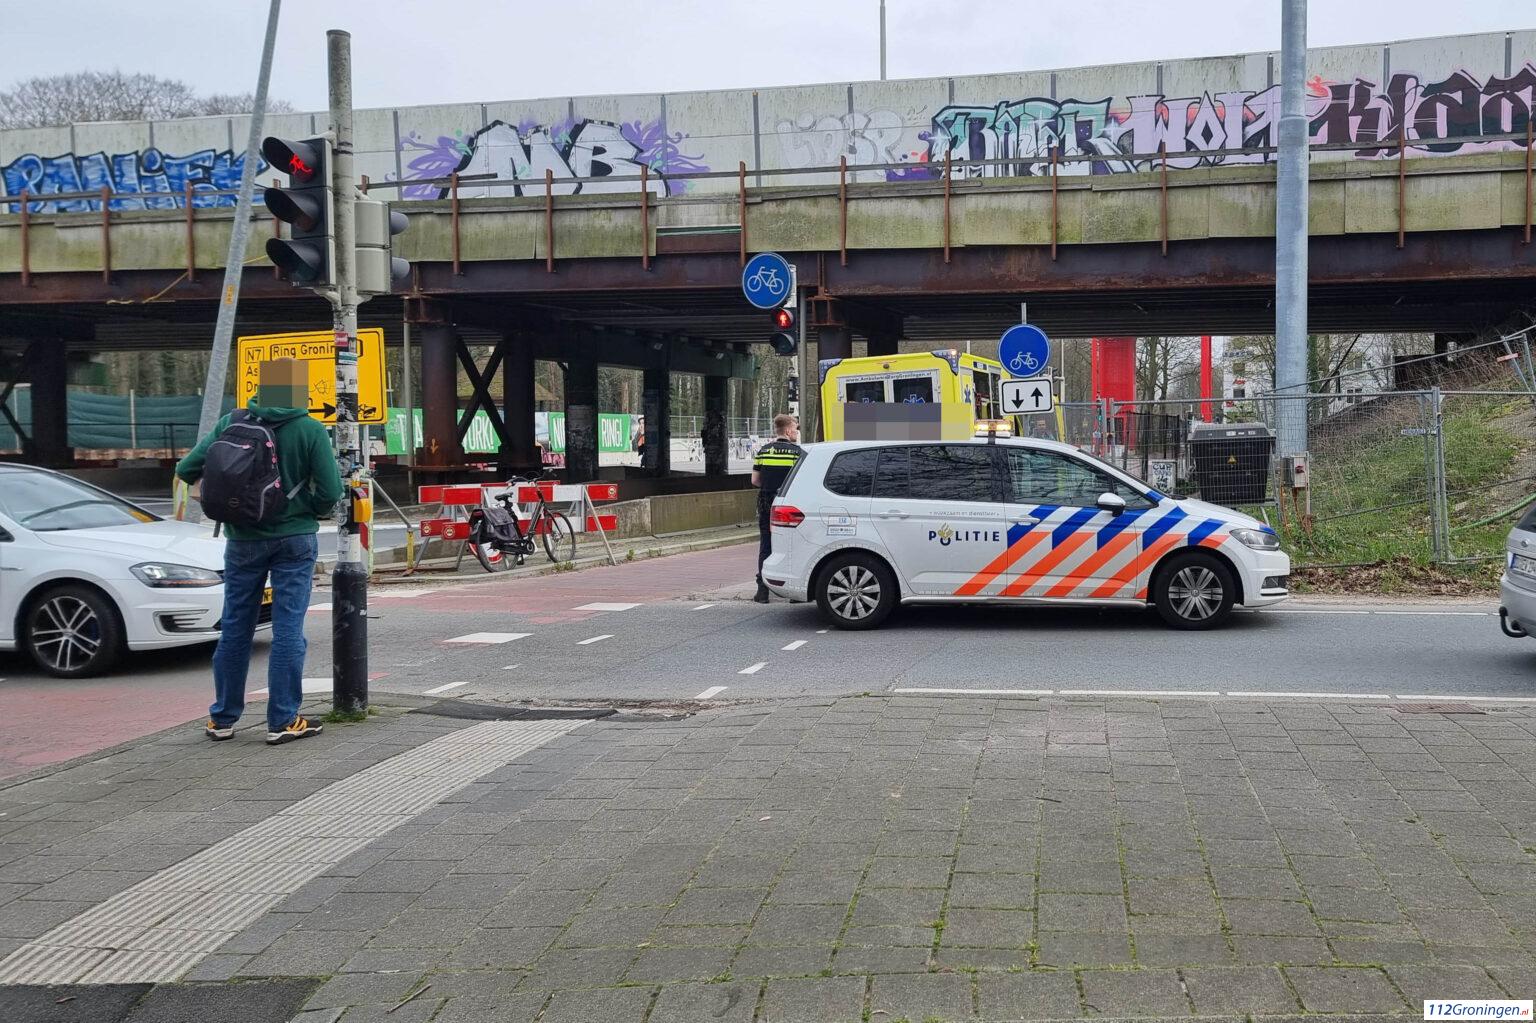 Auto en fietser komen in botsing op de Hereweg, 1 gewonde.